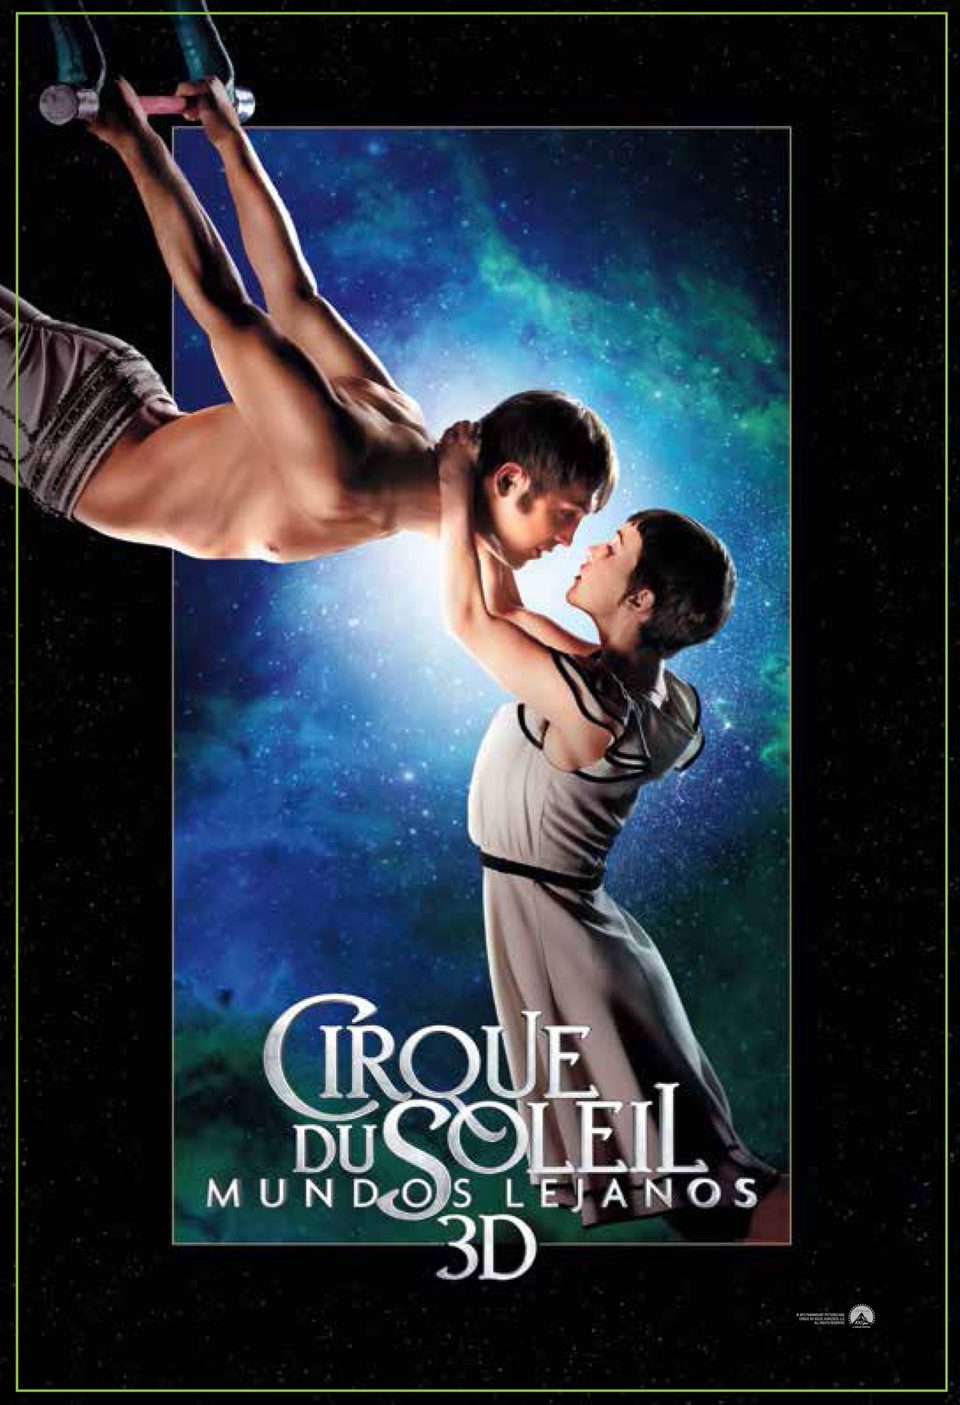 Cartel de Cirque du Soleil: Mundos lejanos - Teaser España